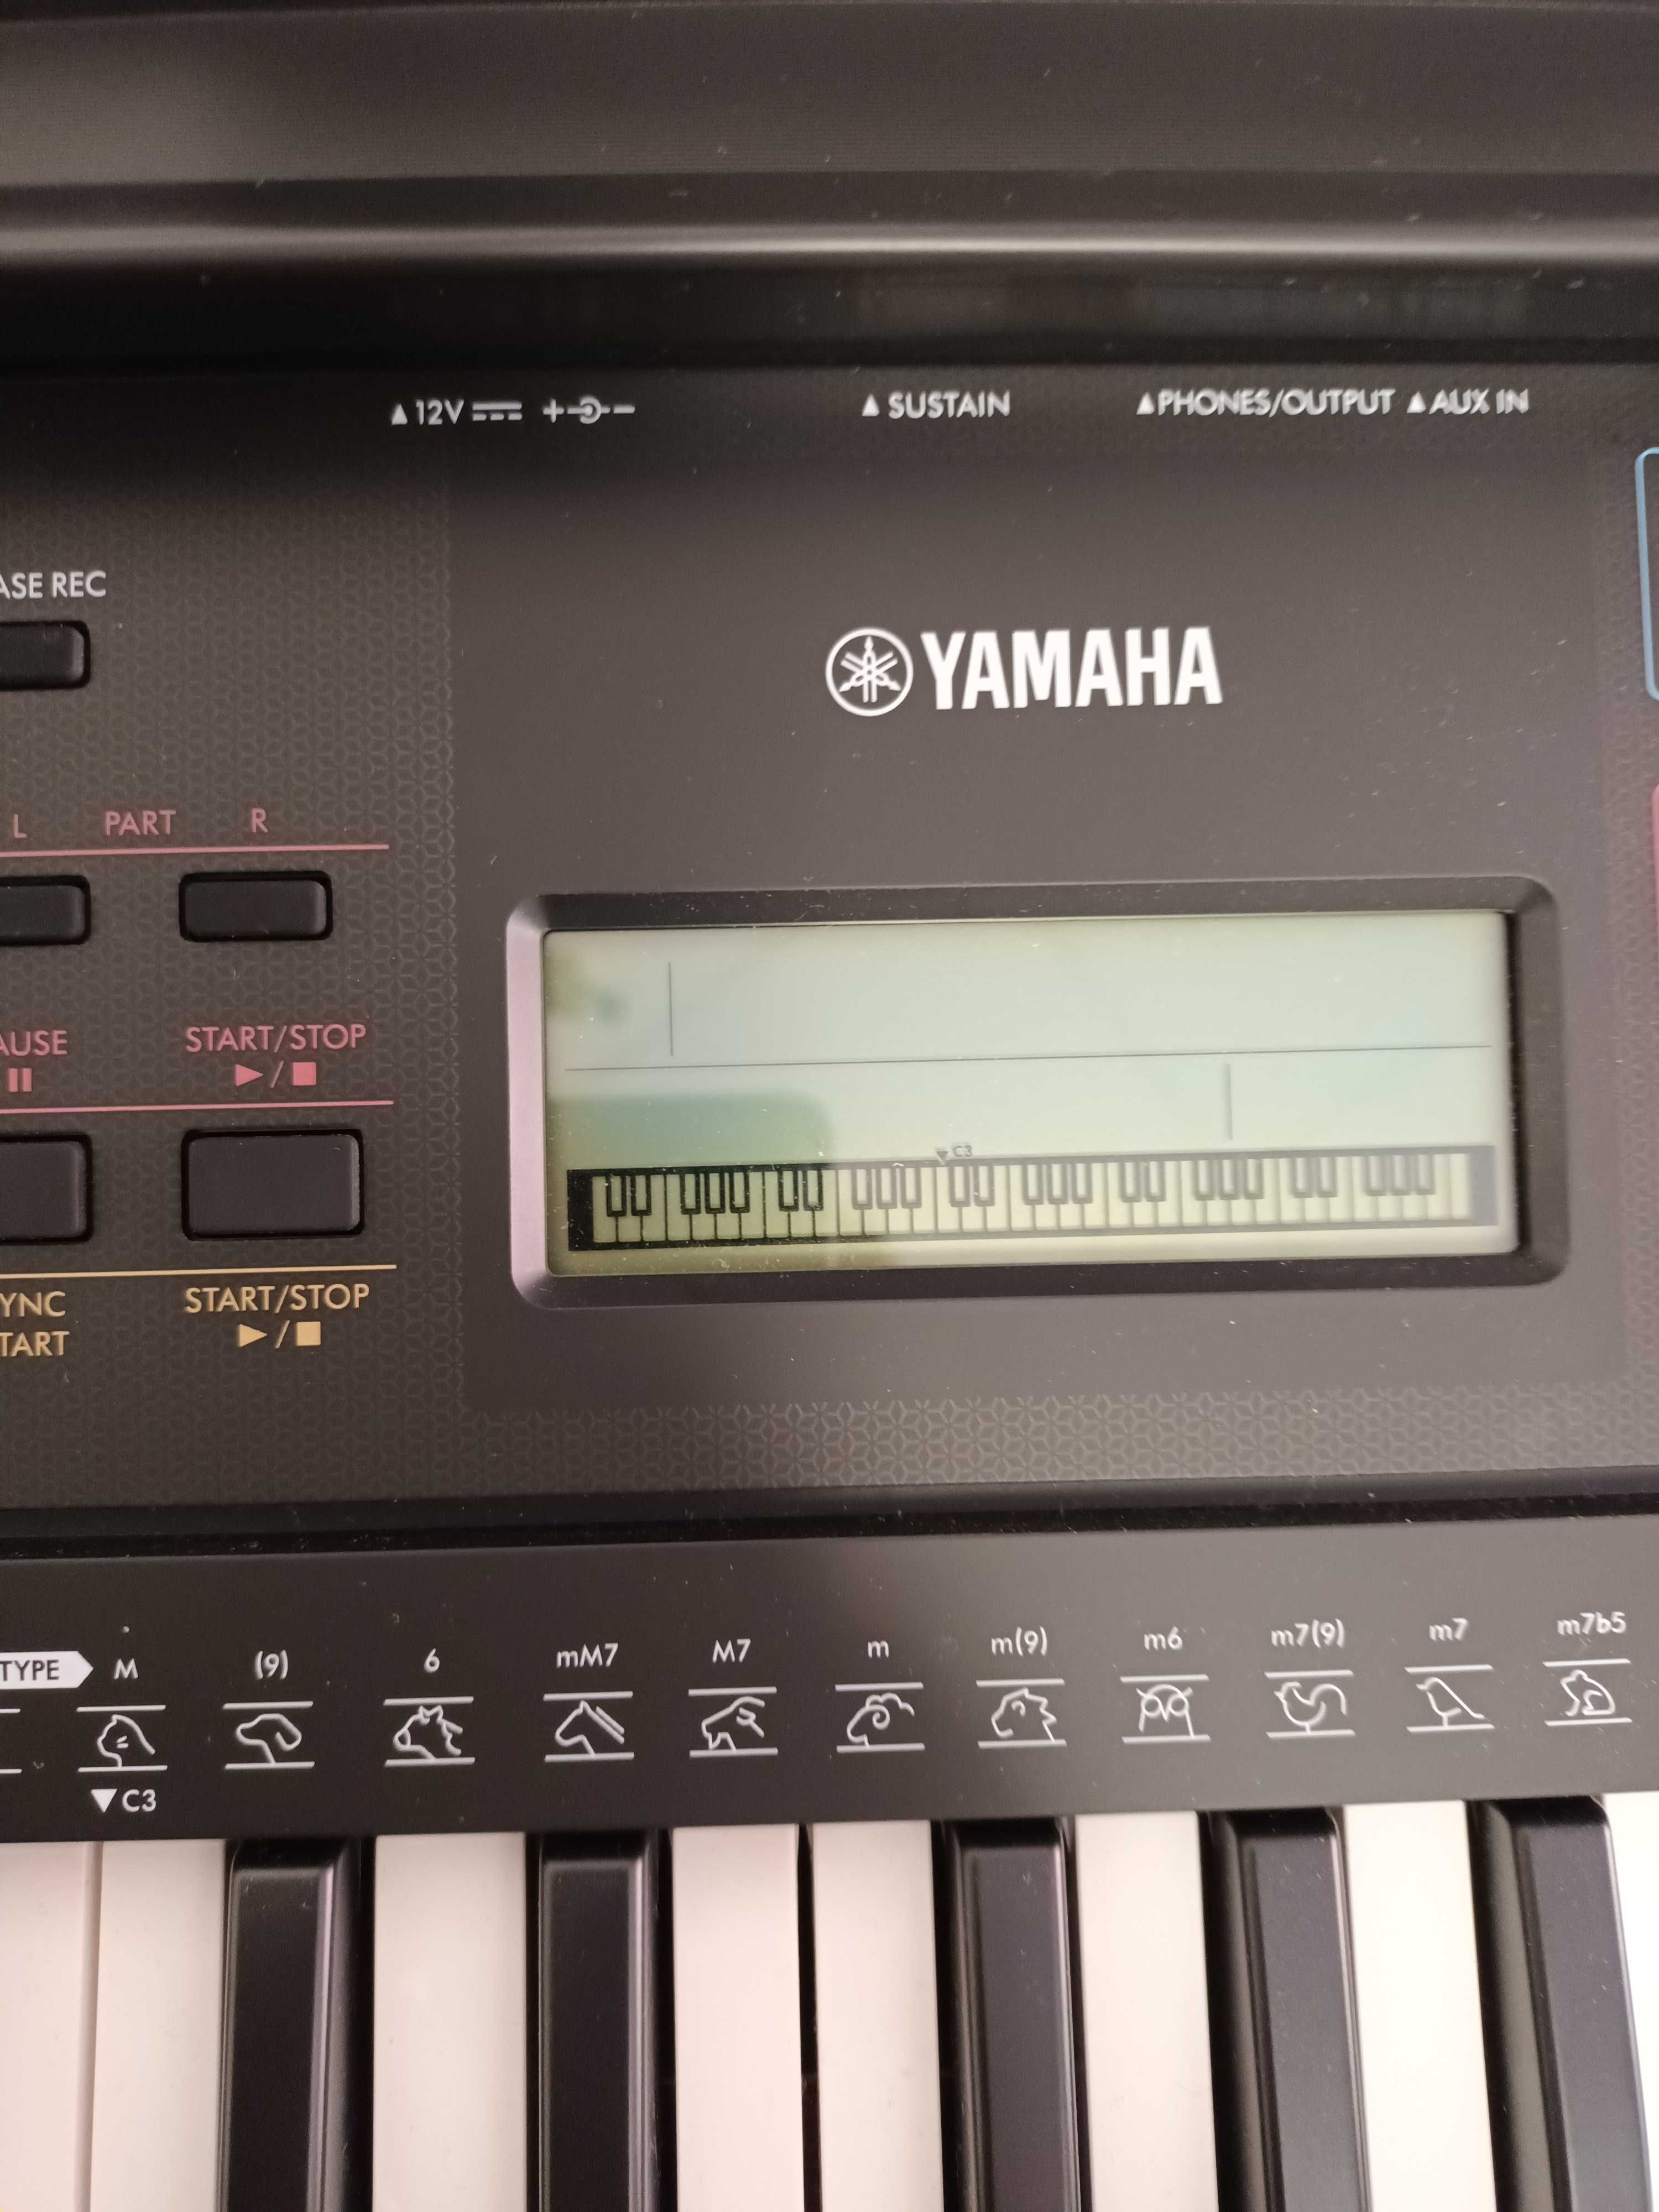 Pianino Yamaha PSR-E273